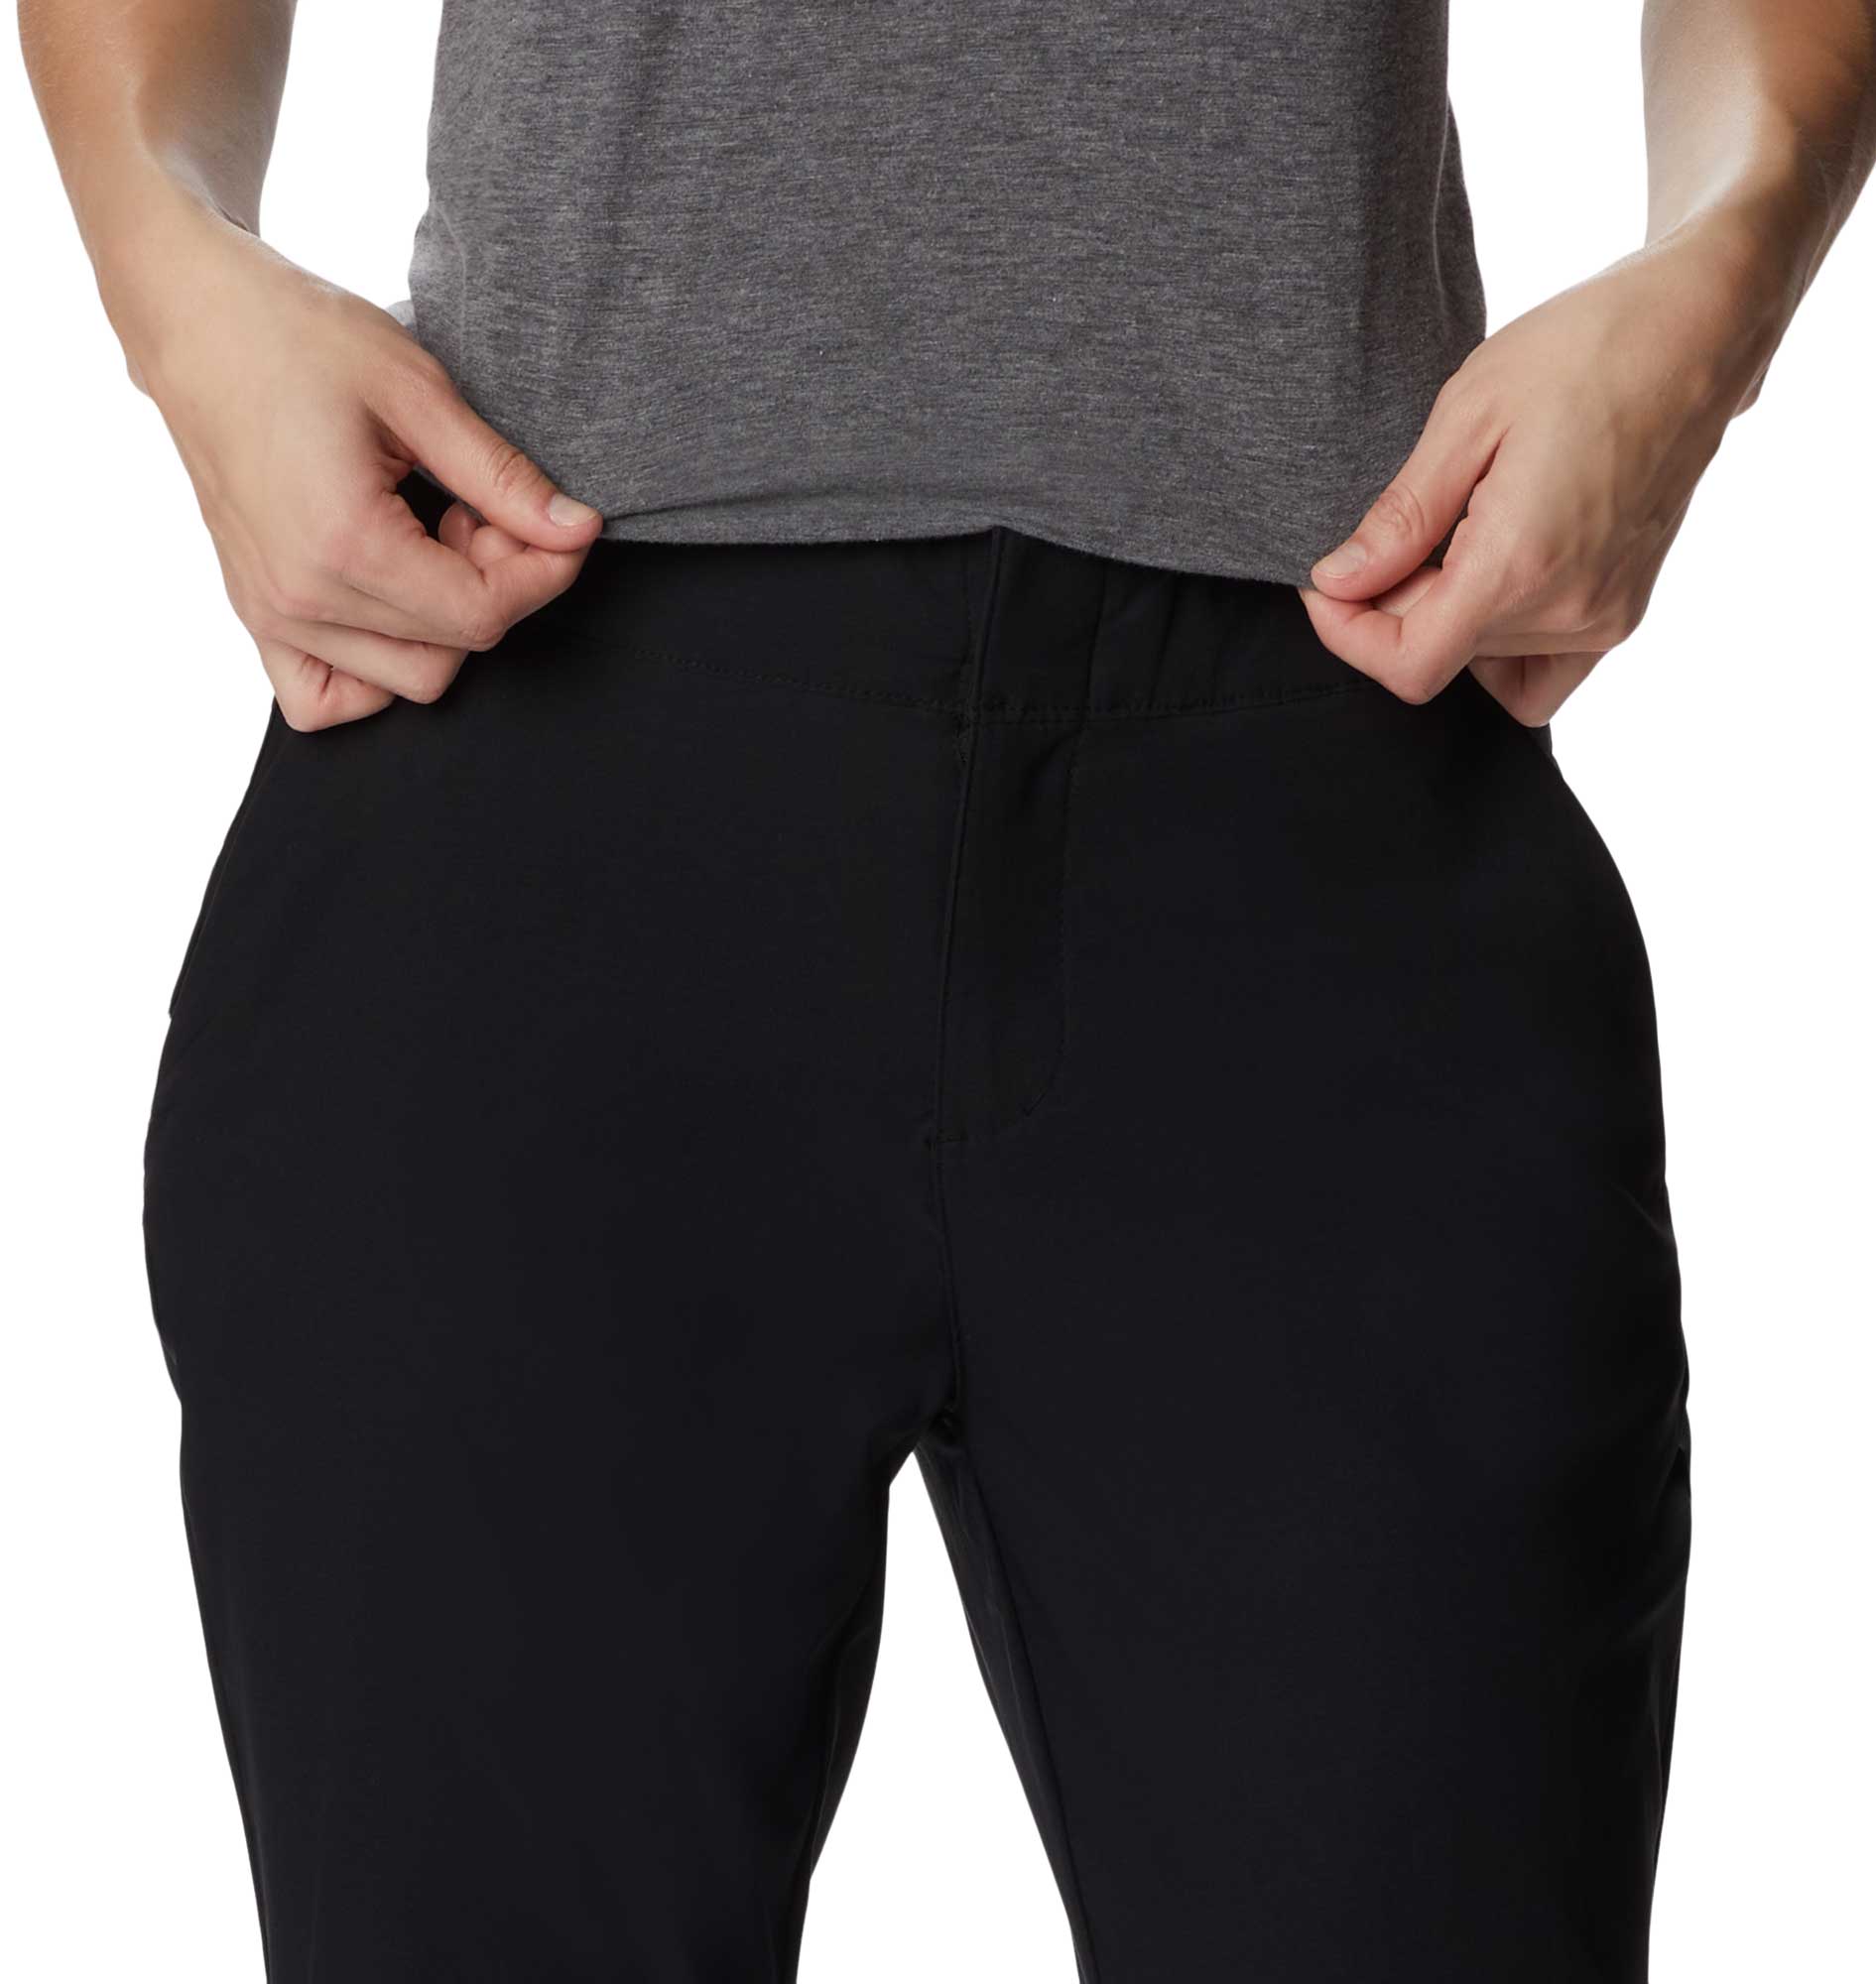 Women's pants